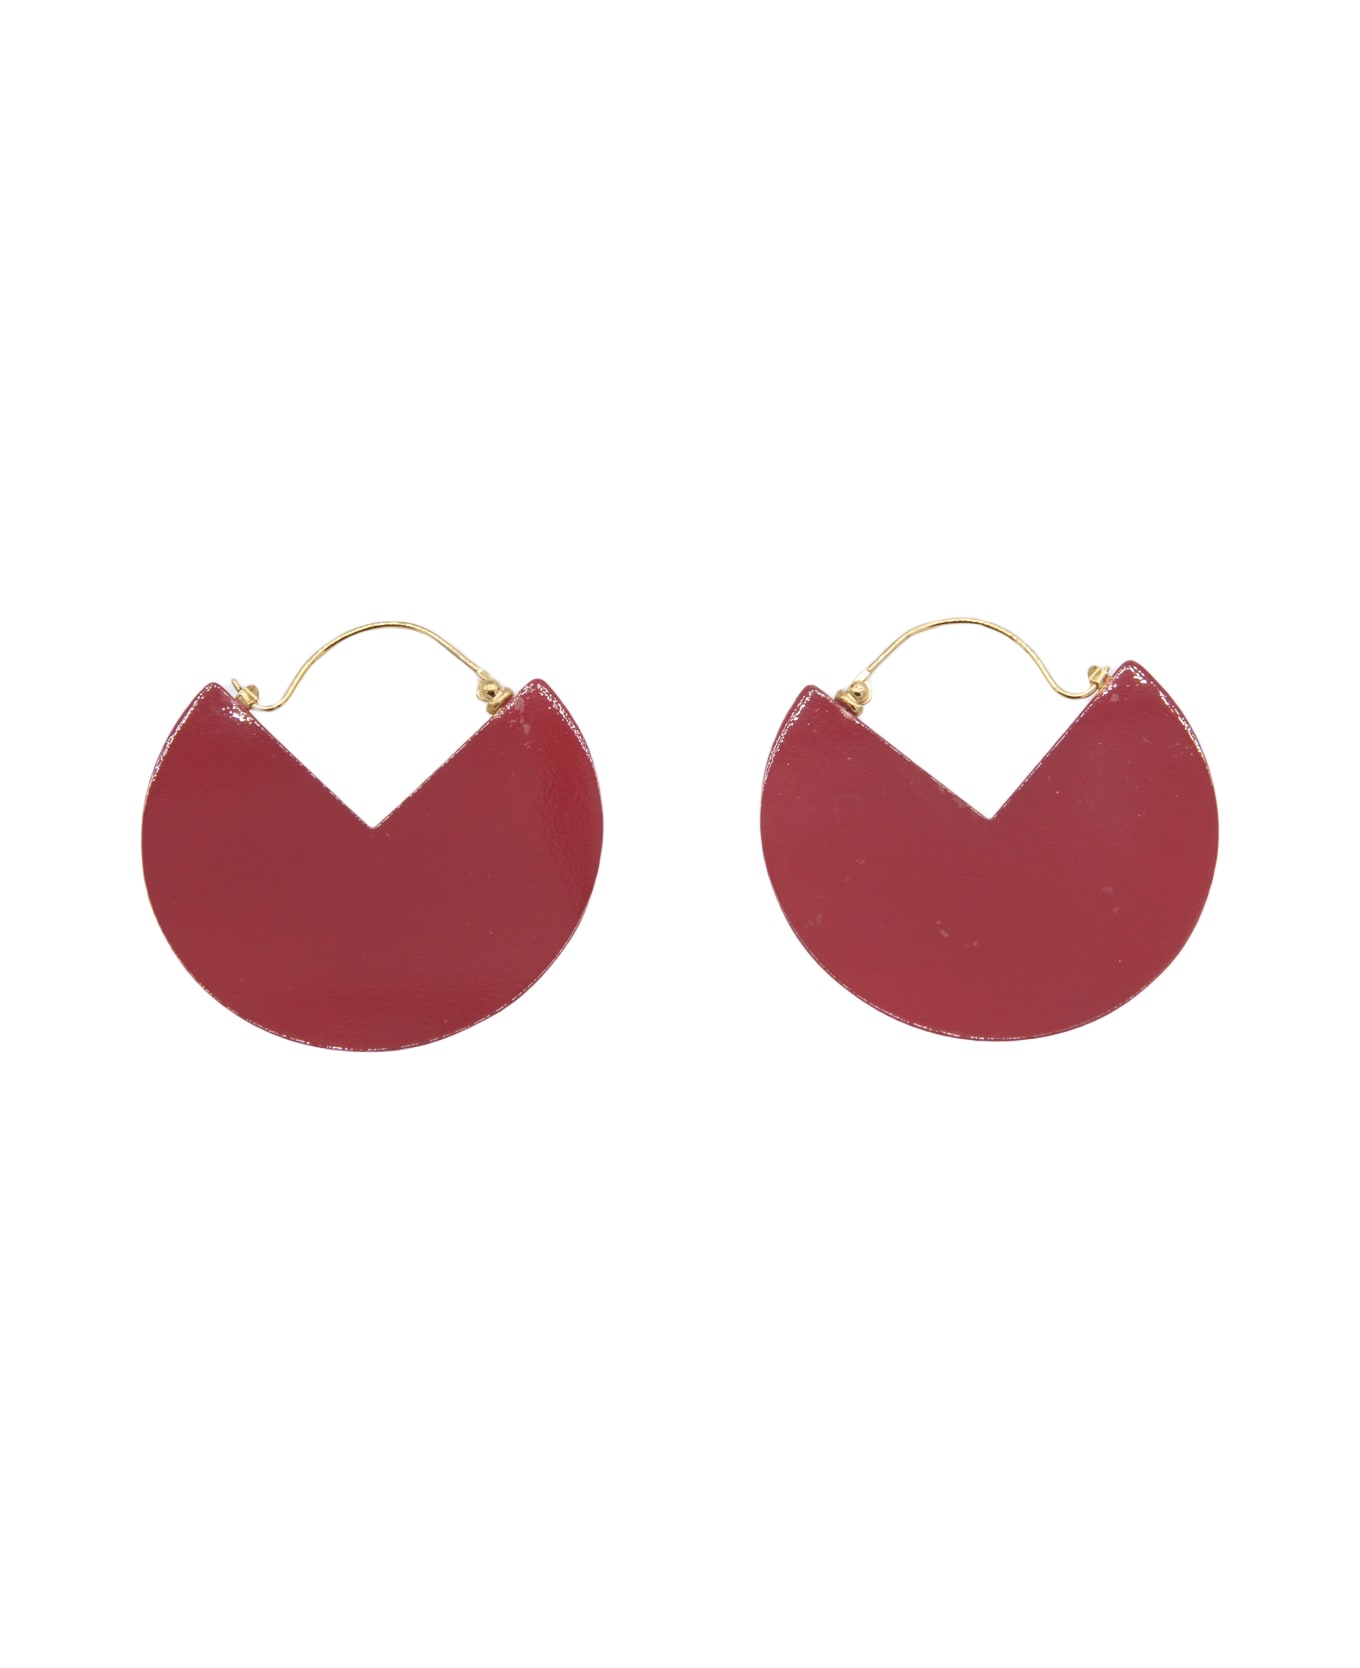 Isabel Marant Very Berry Brass '90 Earrings - VERY BERRY